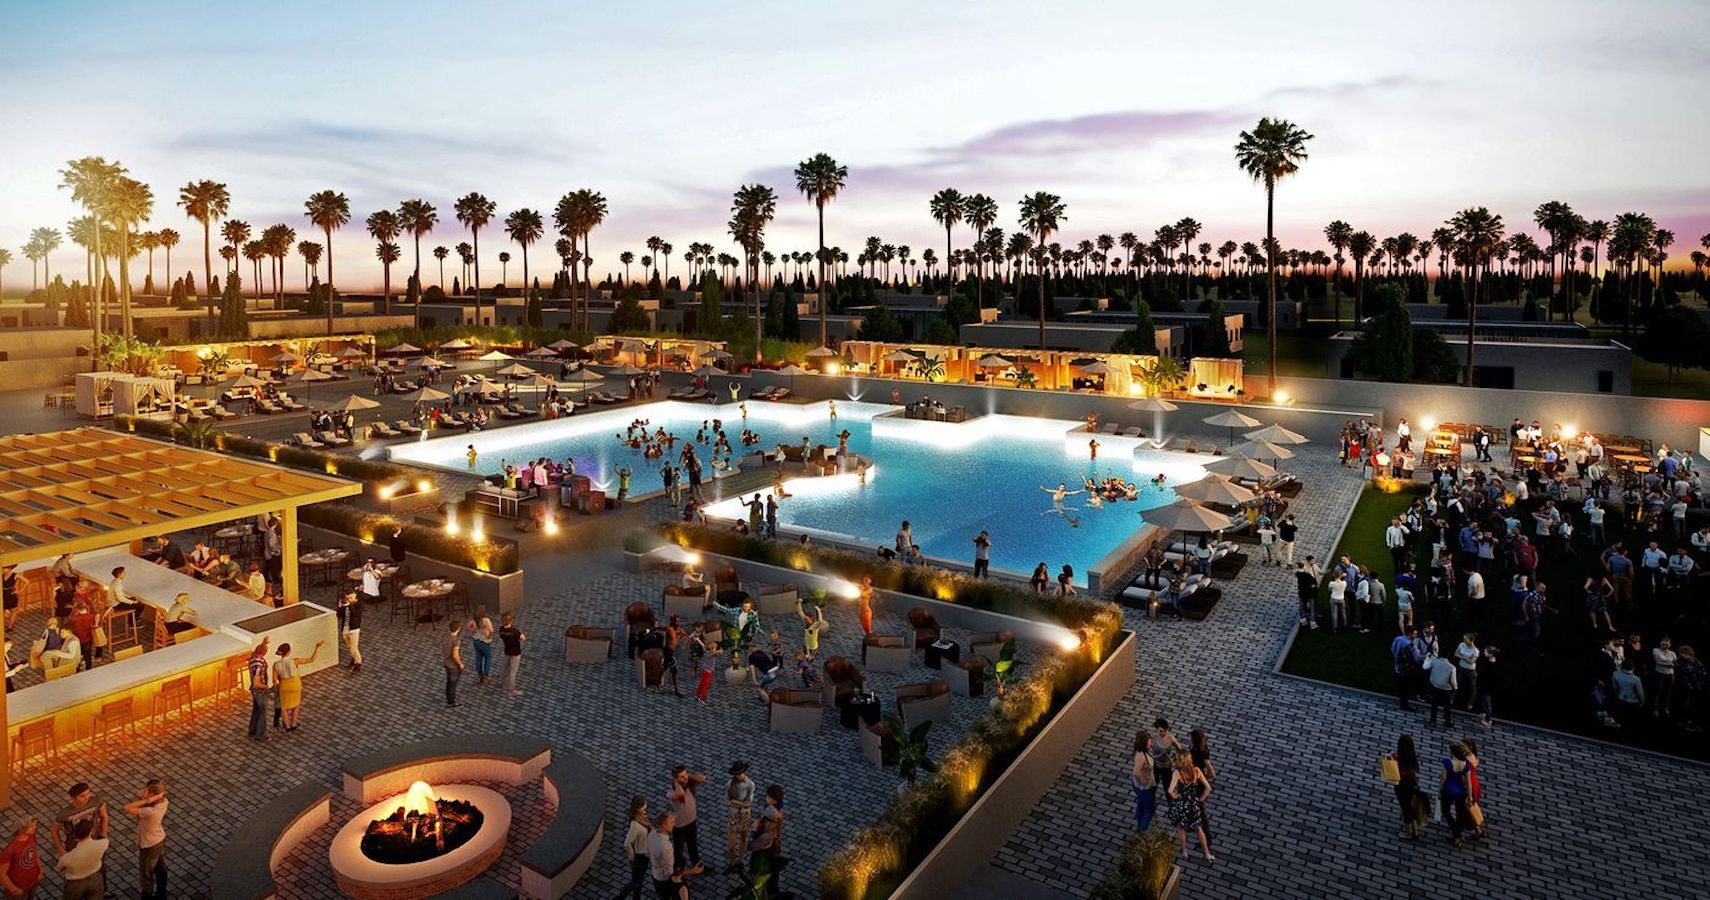 Coachella ganha resort de luxo completo com piscina de gelo